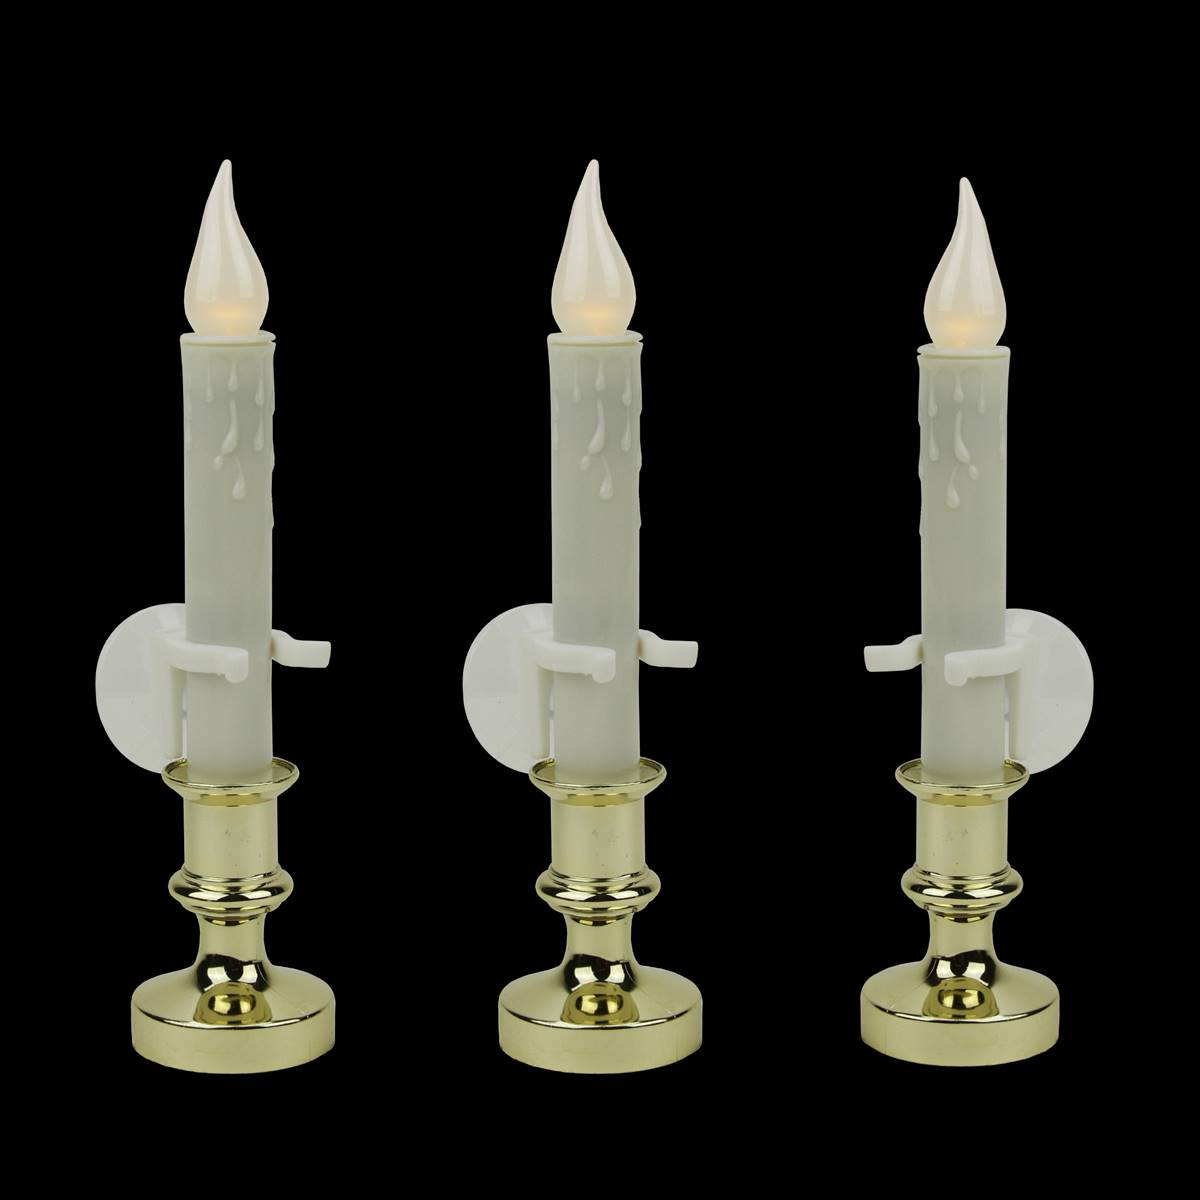 Northlight Seasonal Set Of 3 LED Flickering Window Candle Lamps